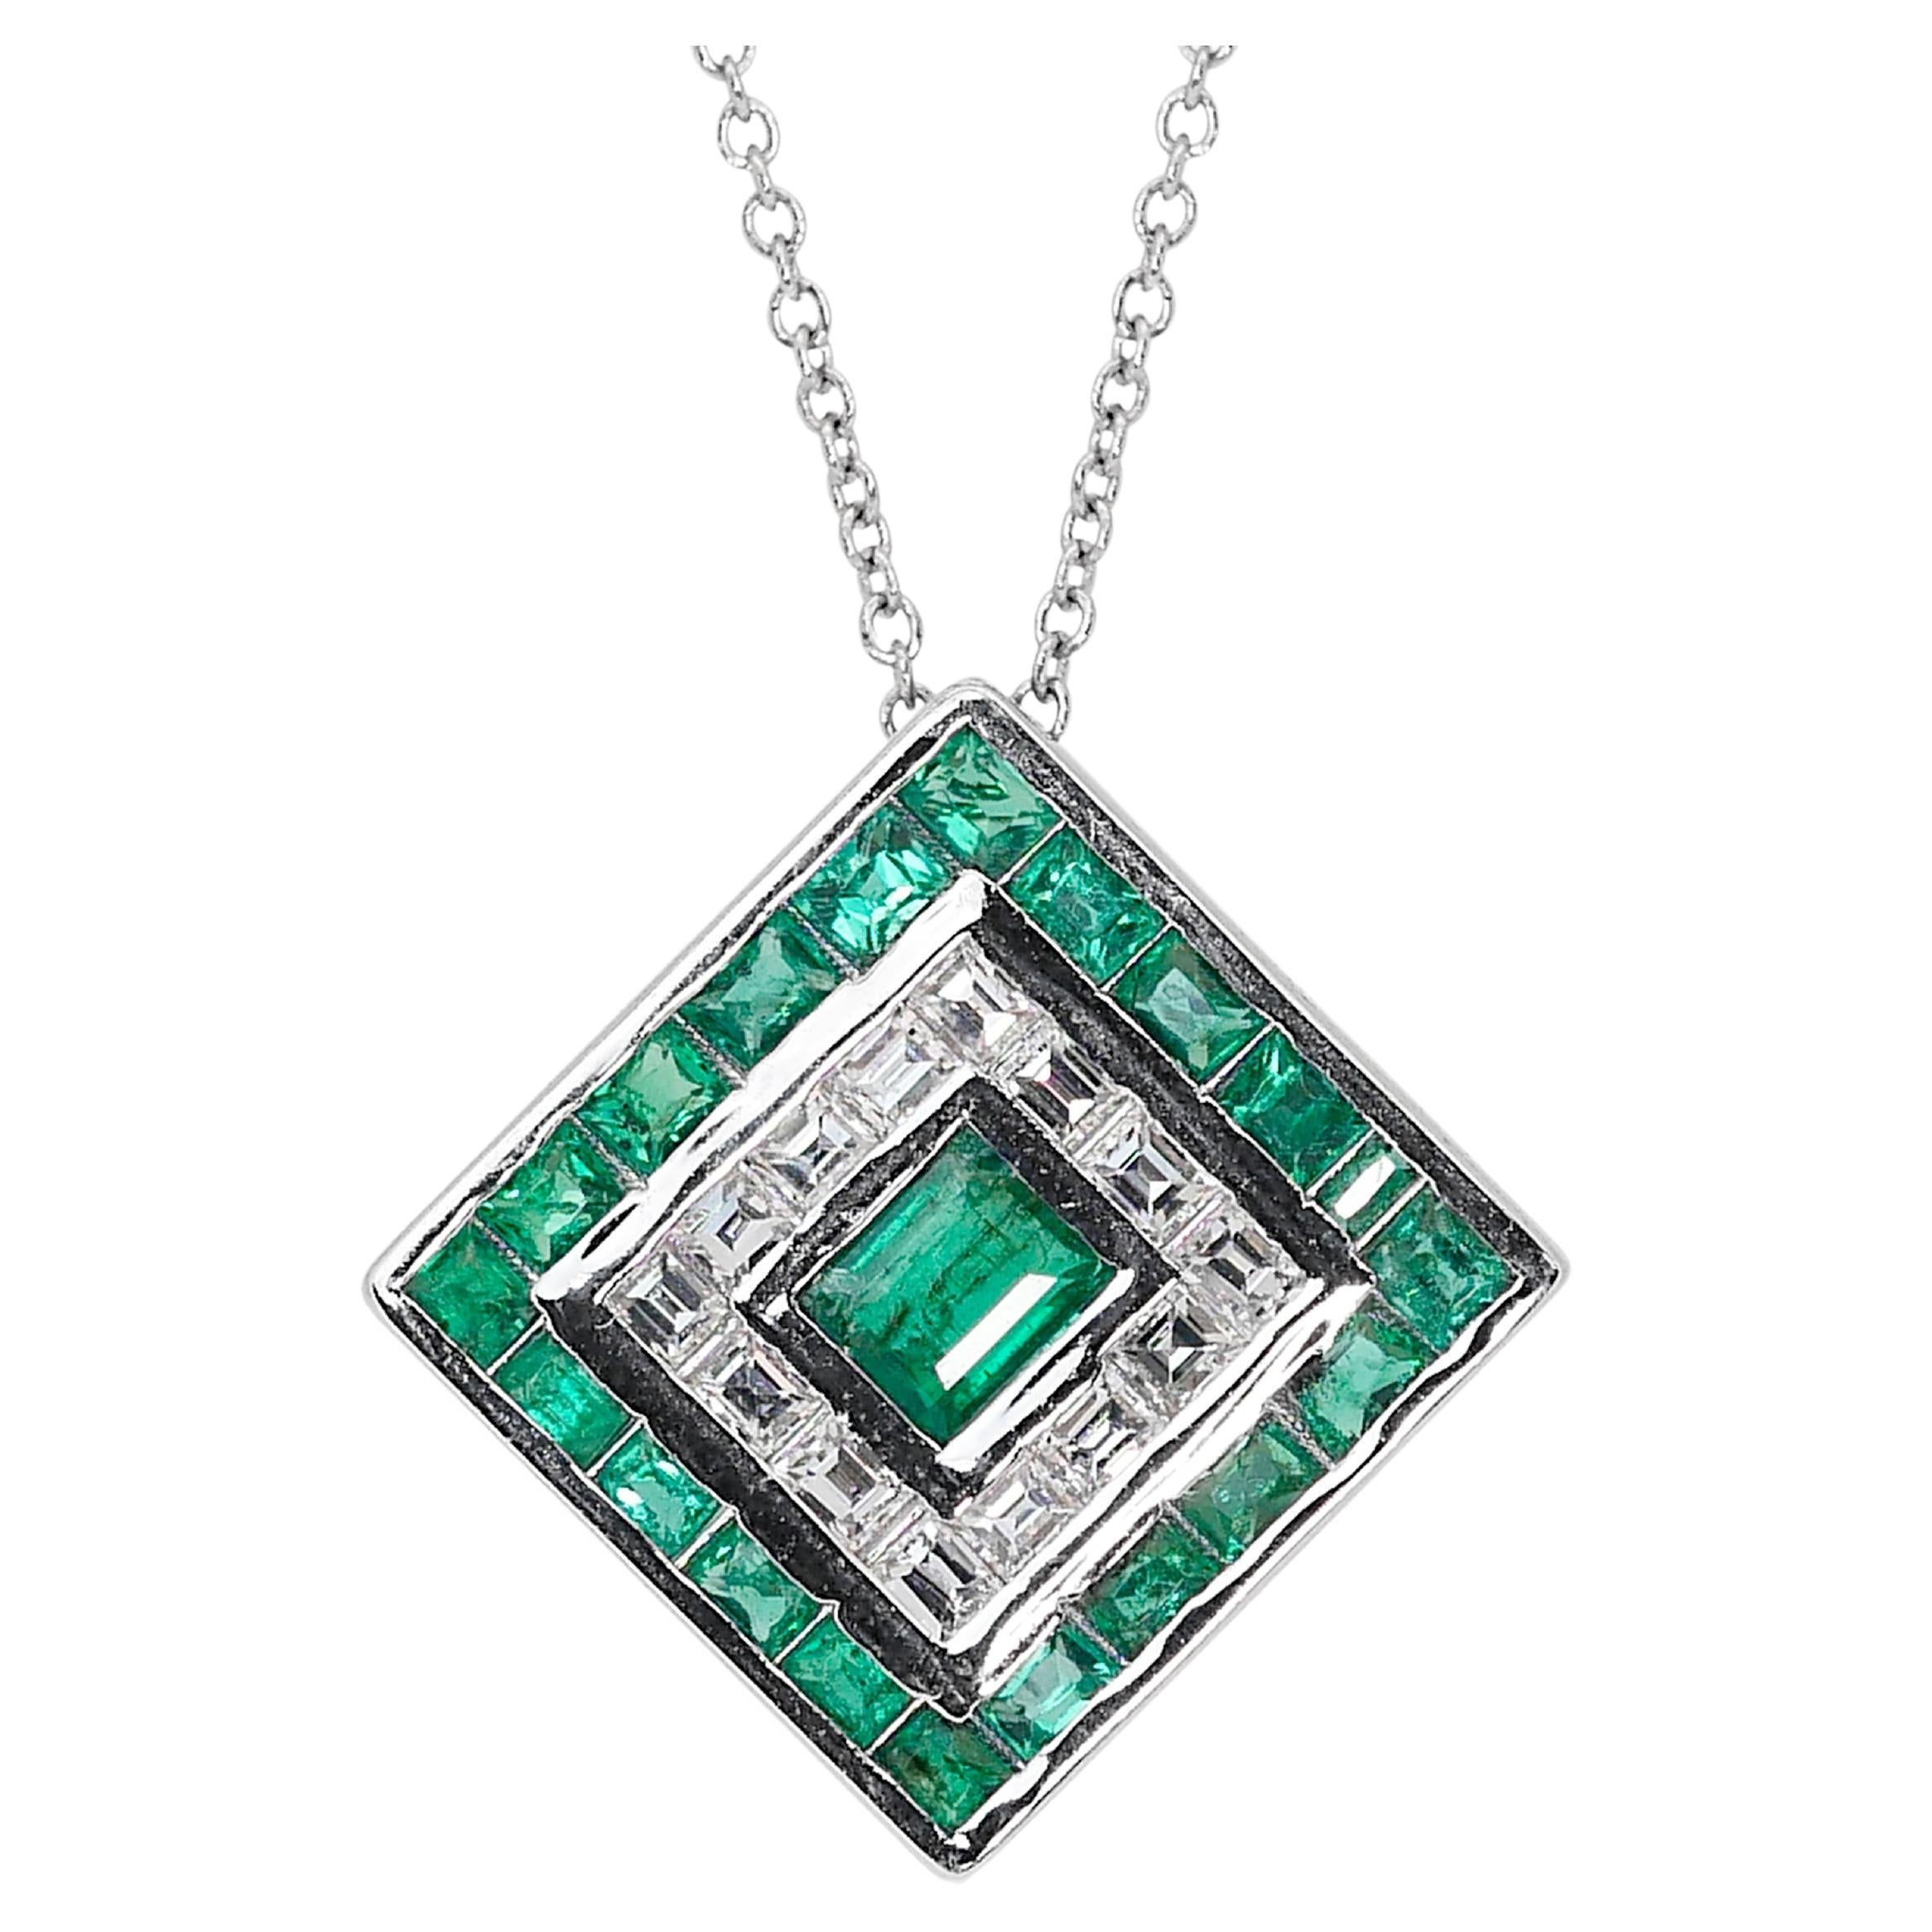 Captivating 1.45ct Emeralds and Diamonds Halo Necklace in 14k White Gold - IGI 